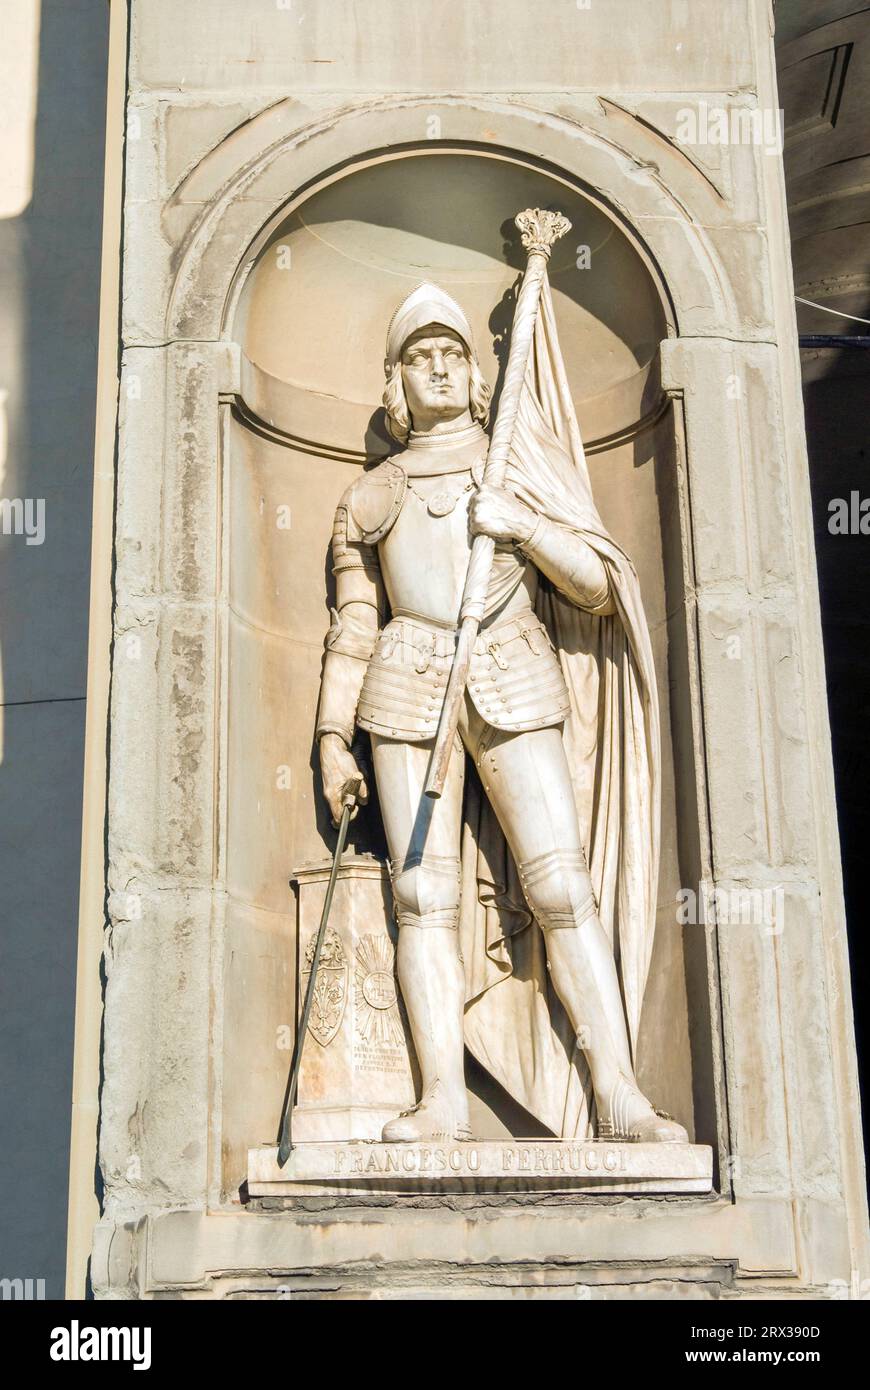 Statue de Fancesco Ferrucci, Uffizi, Florence (Firenze), UNESCO World Heritage Site, Toscane, Italie, Europe Banque D'Images